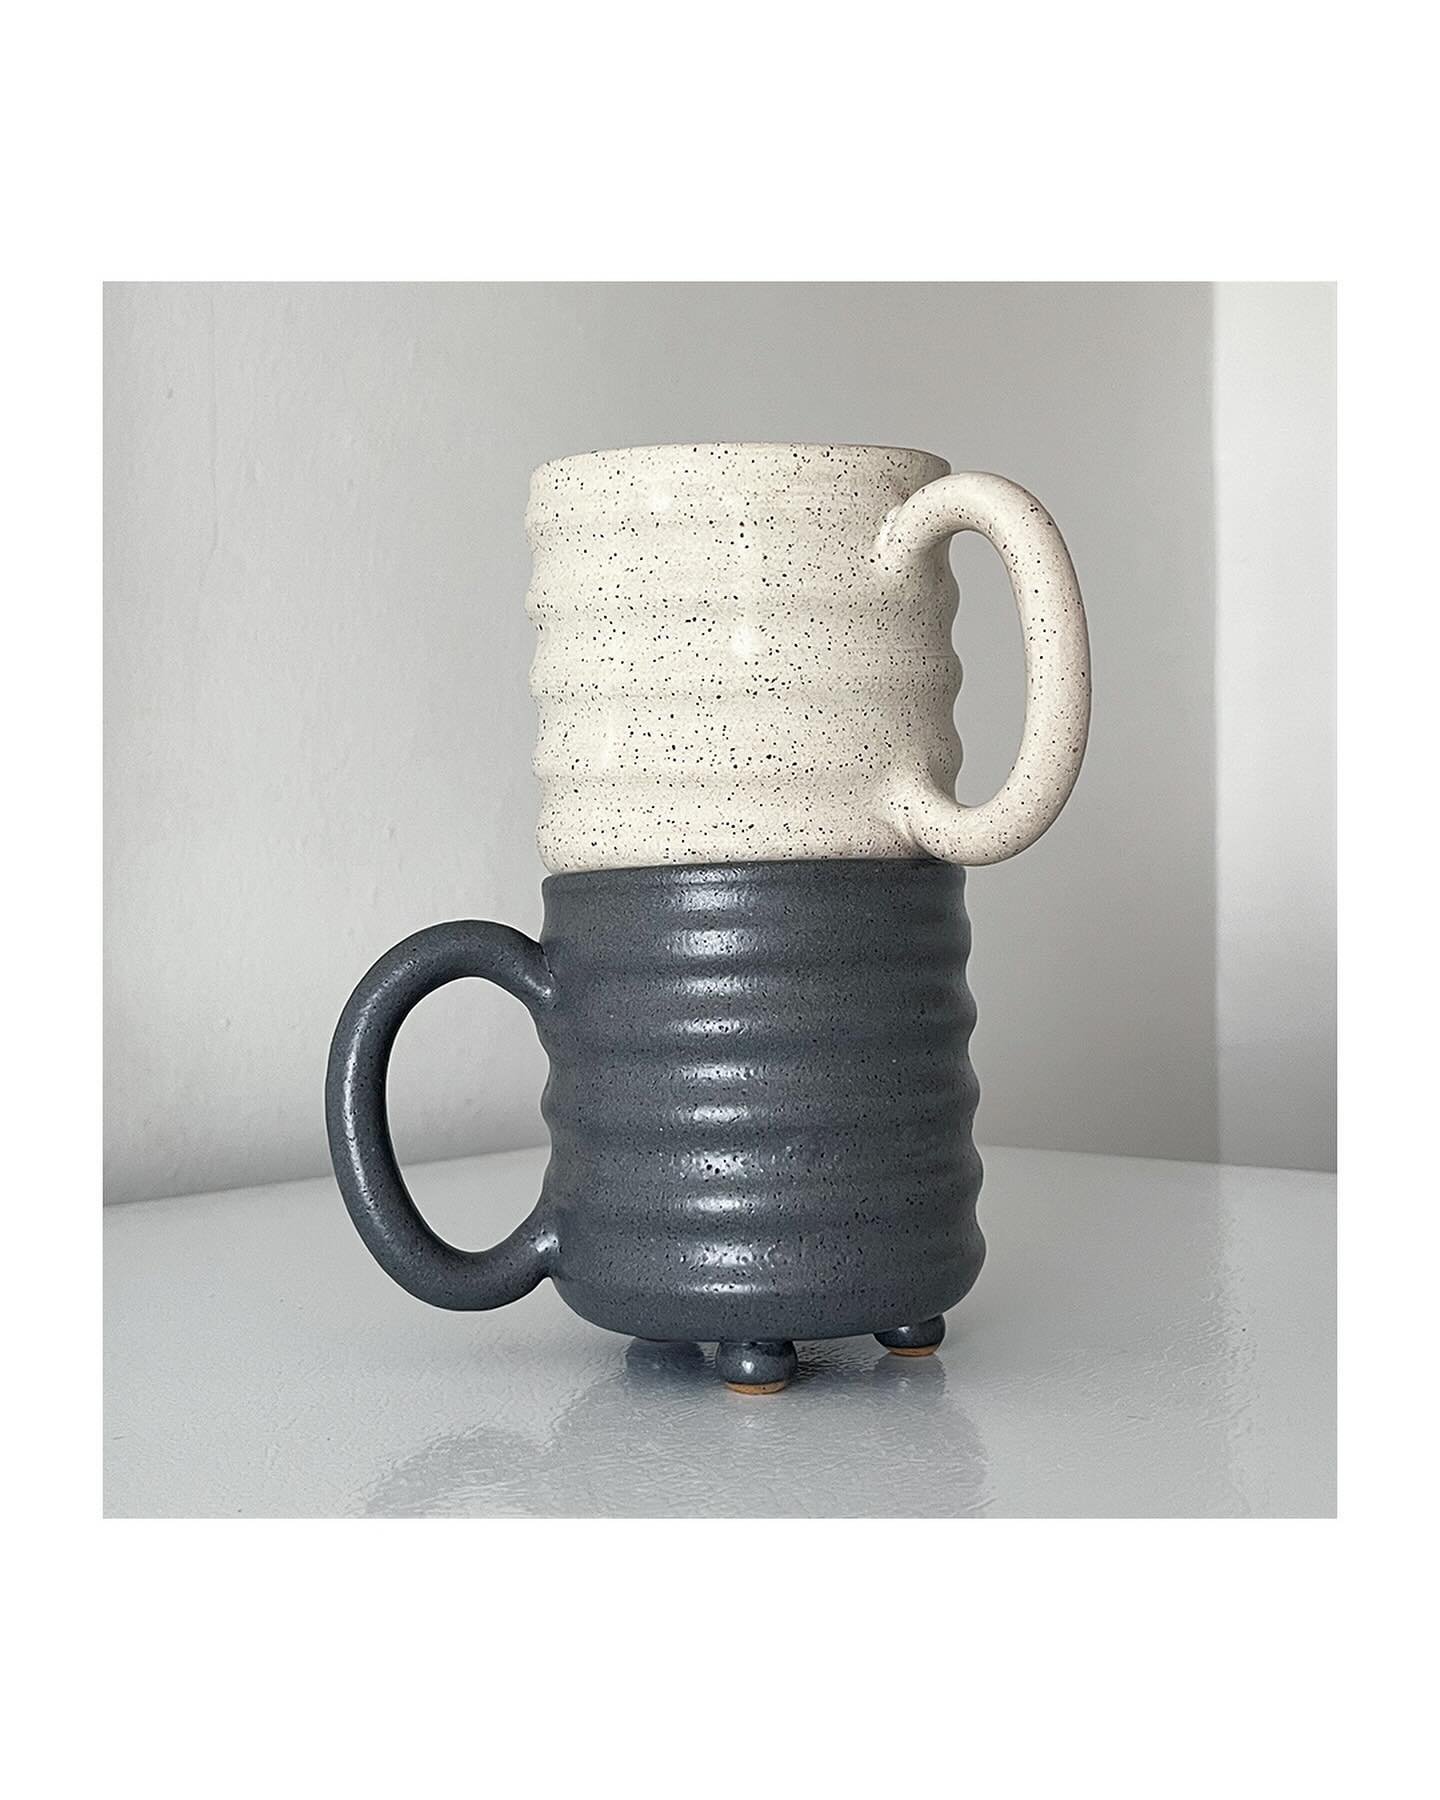 Wobble mug in charcoal satin glaze. 
.
.
.
#bowlcutceramics #clay #ceramics #ceramicart #contemporaryceramics #kilnfolk #potteryforall #handmadeceramics #pottersofinstagram #pottery #handmade #craft #handcrafted #keramik #bipocartists #ihavethisthing